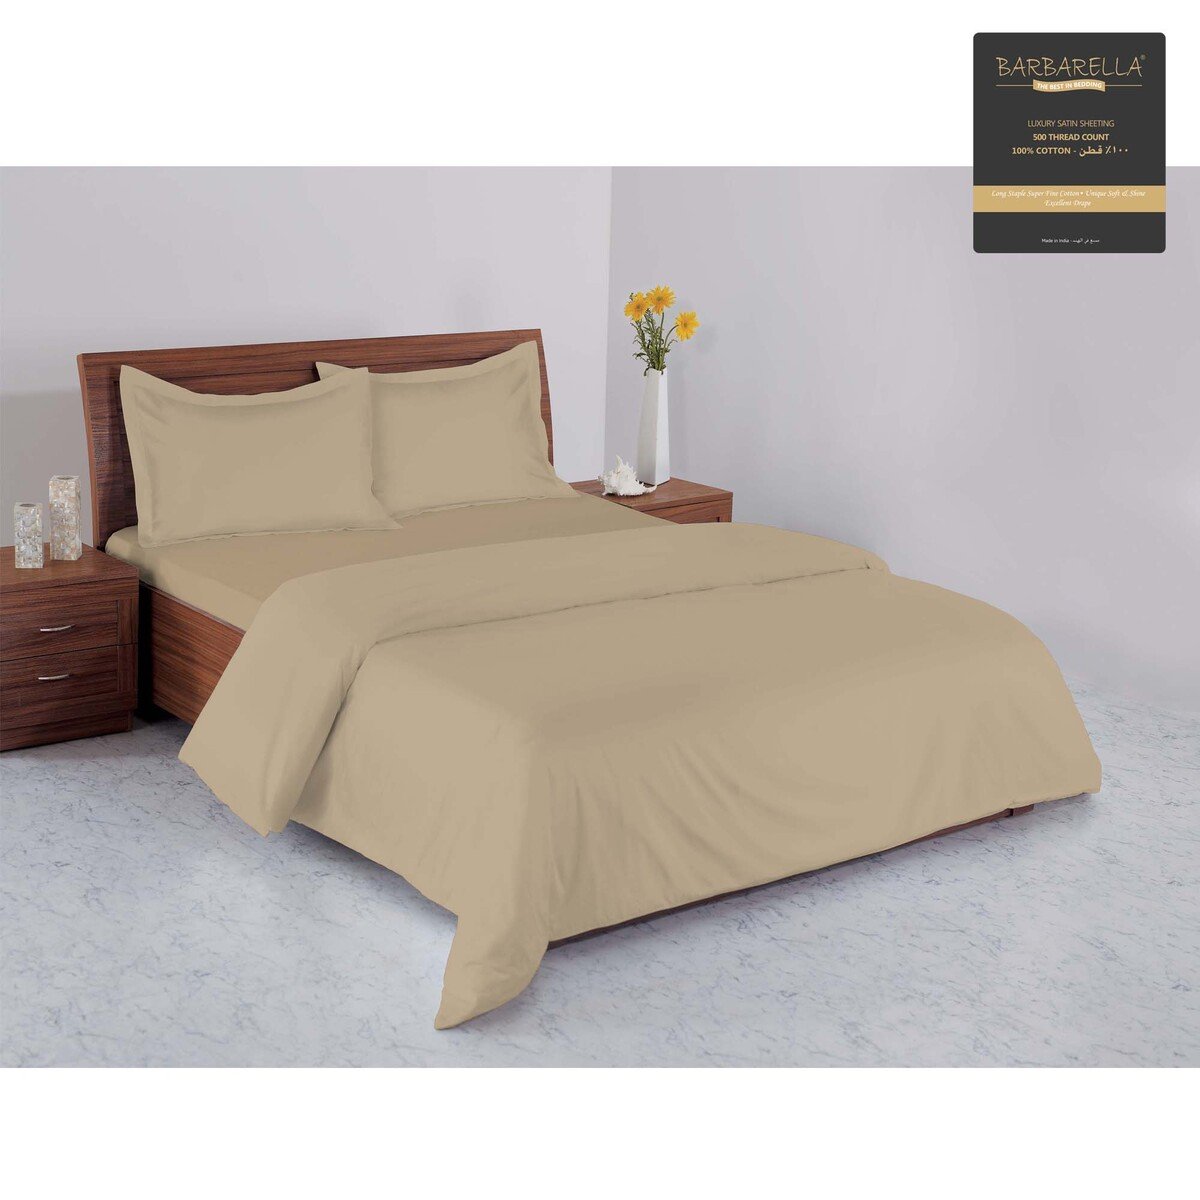 Barbarella Bed Sheet 259x274cm Brown 500TC